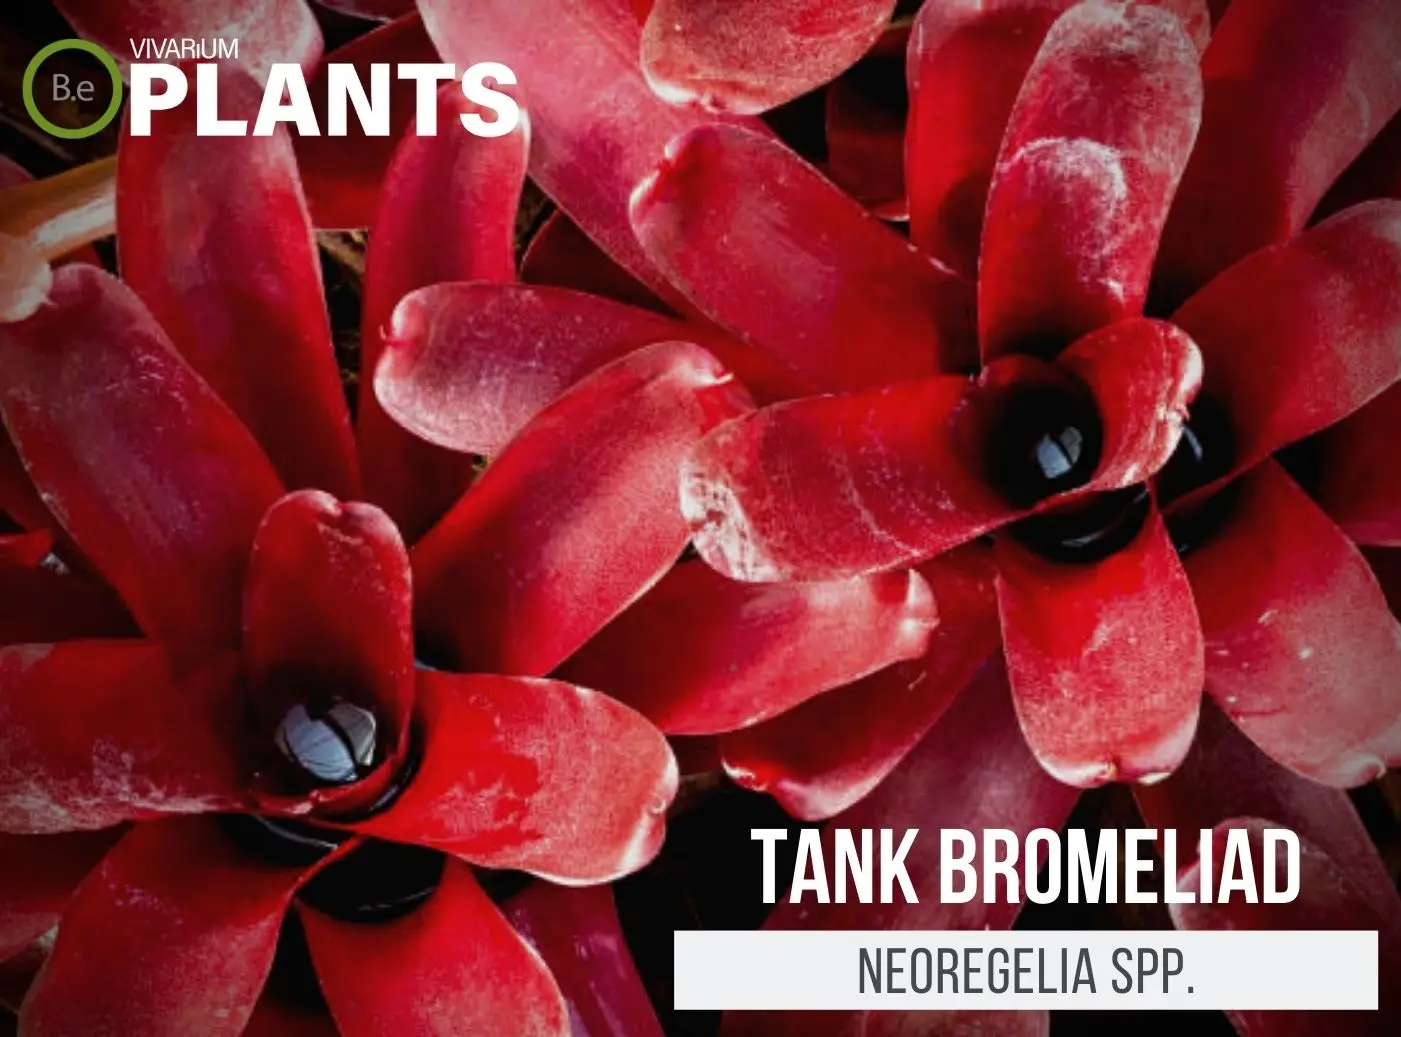 Tank Bromeliad "Neoregelia spp" Plant Care Guide